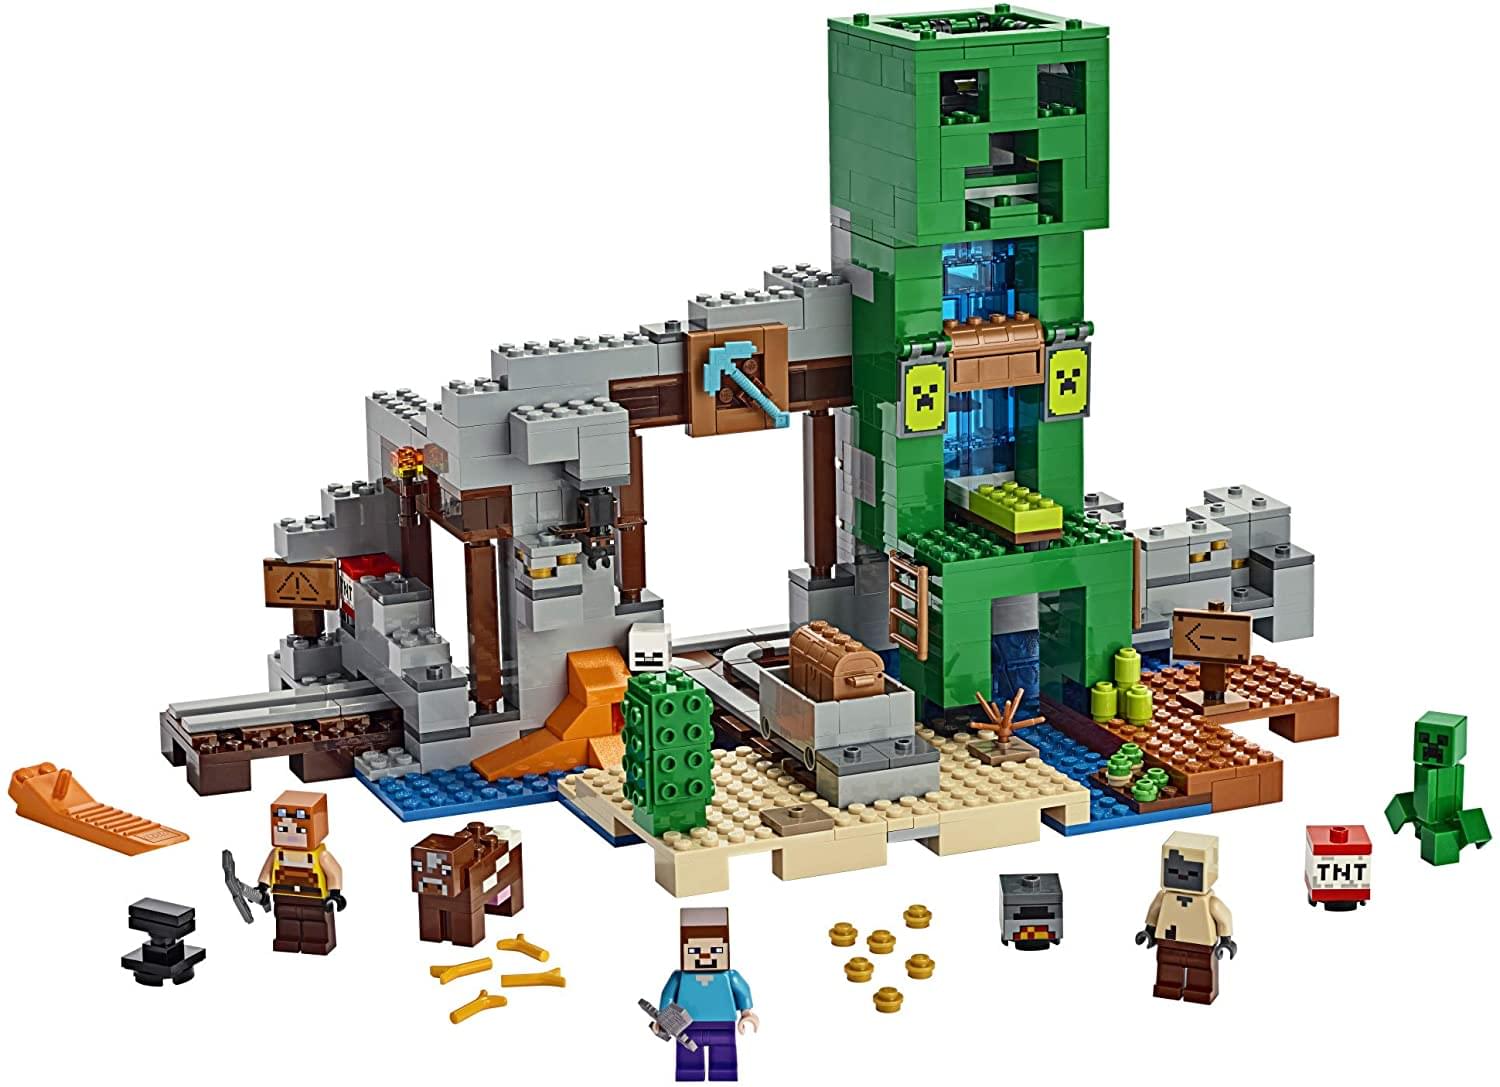 LEGO Minecraft 21155 The Creeper Mine 834 Piece Building Set